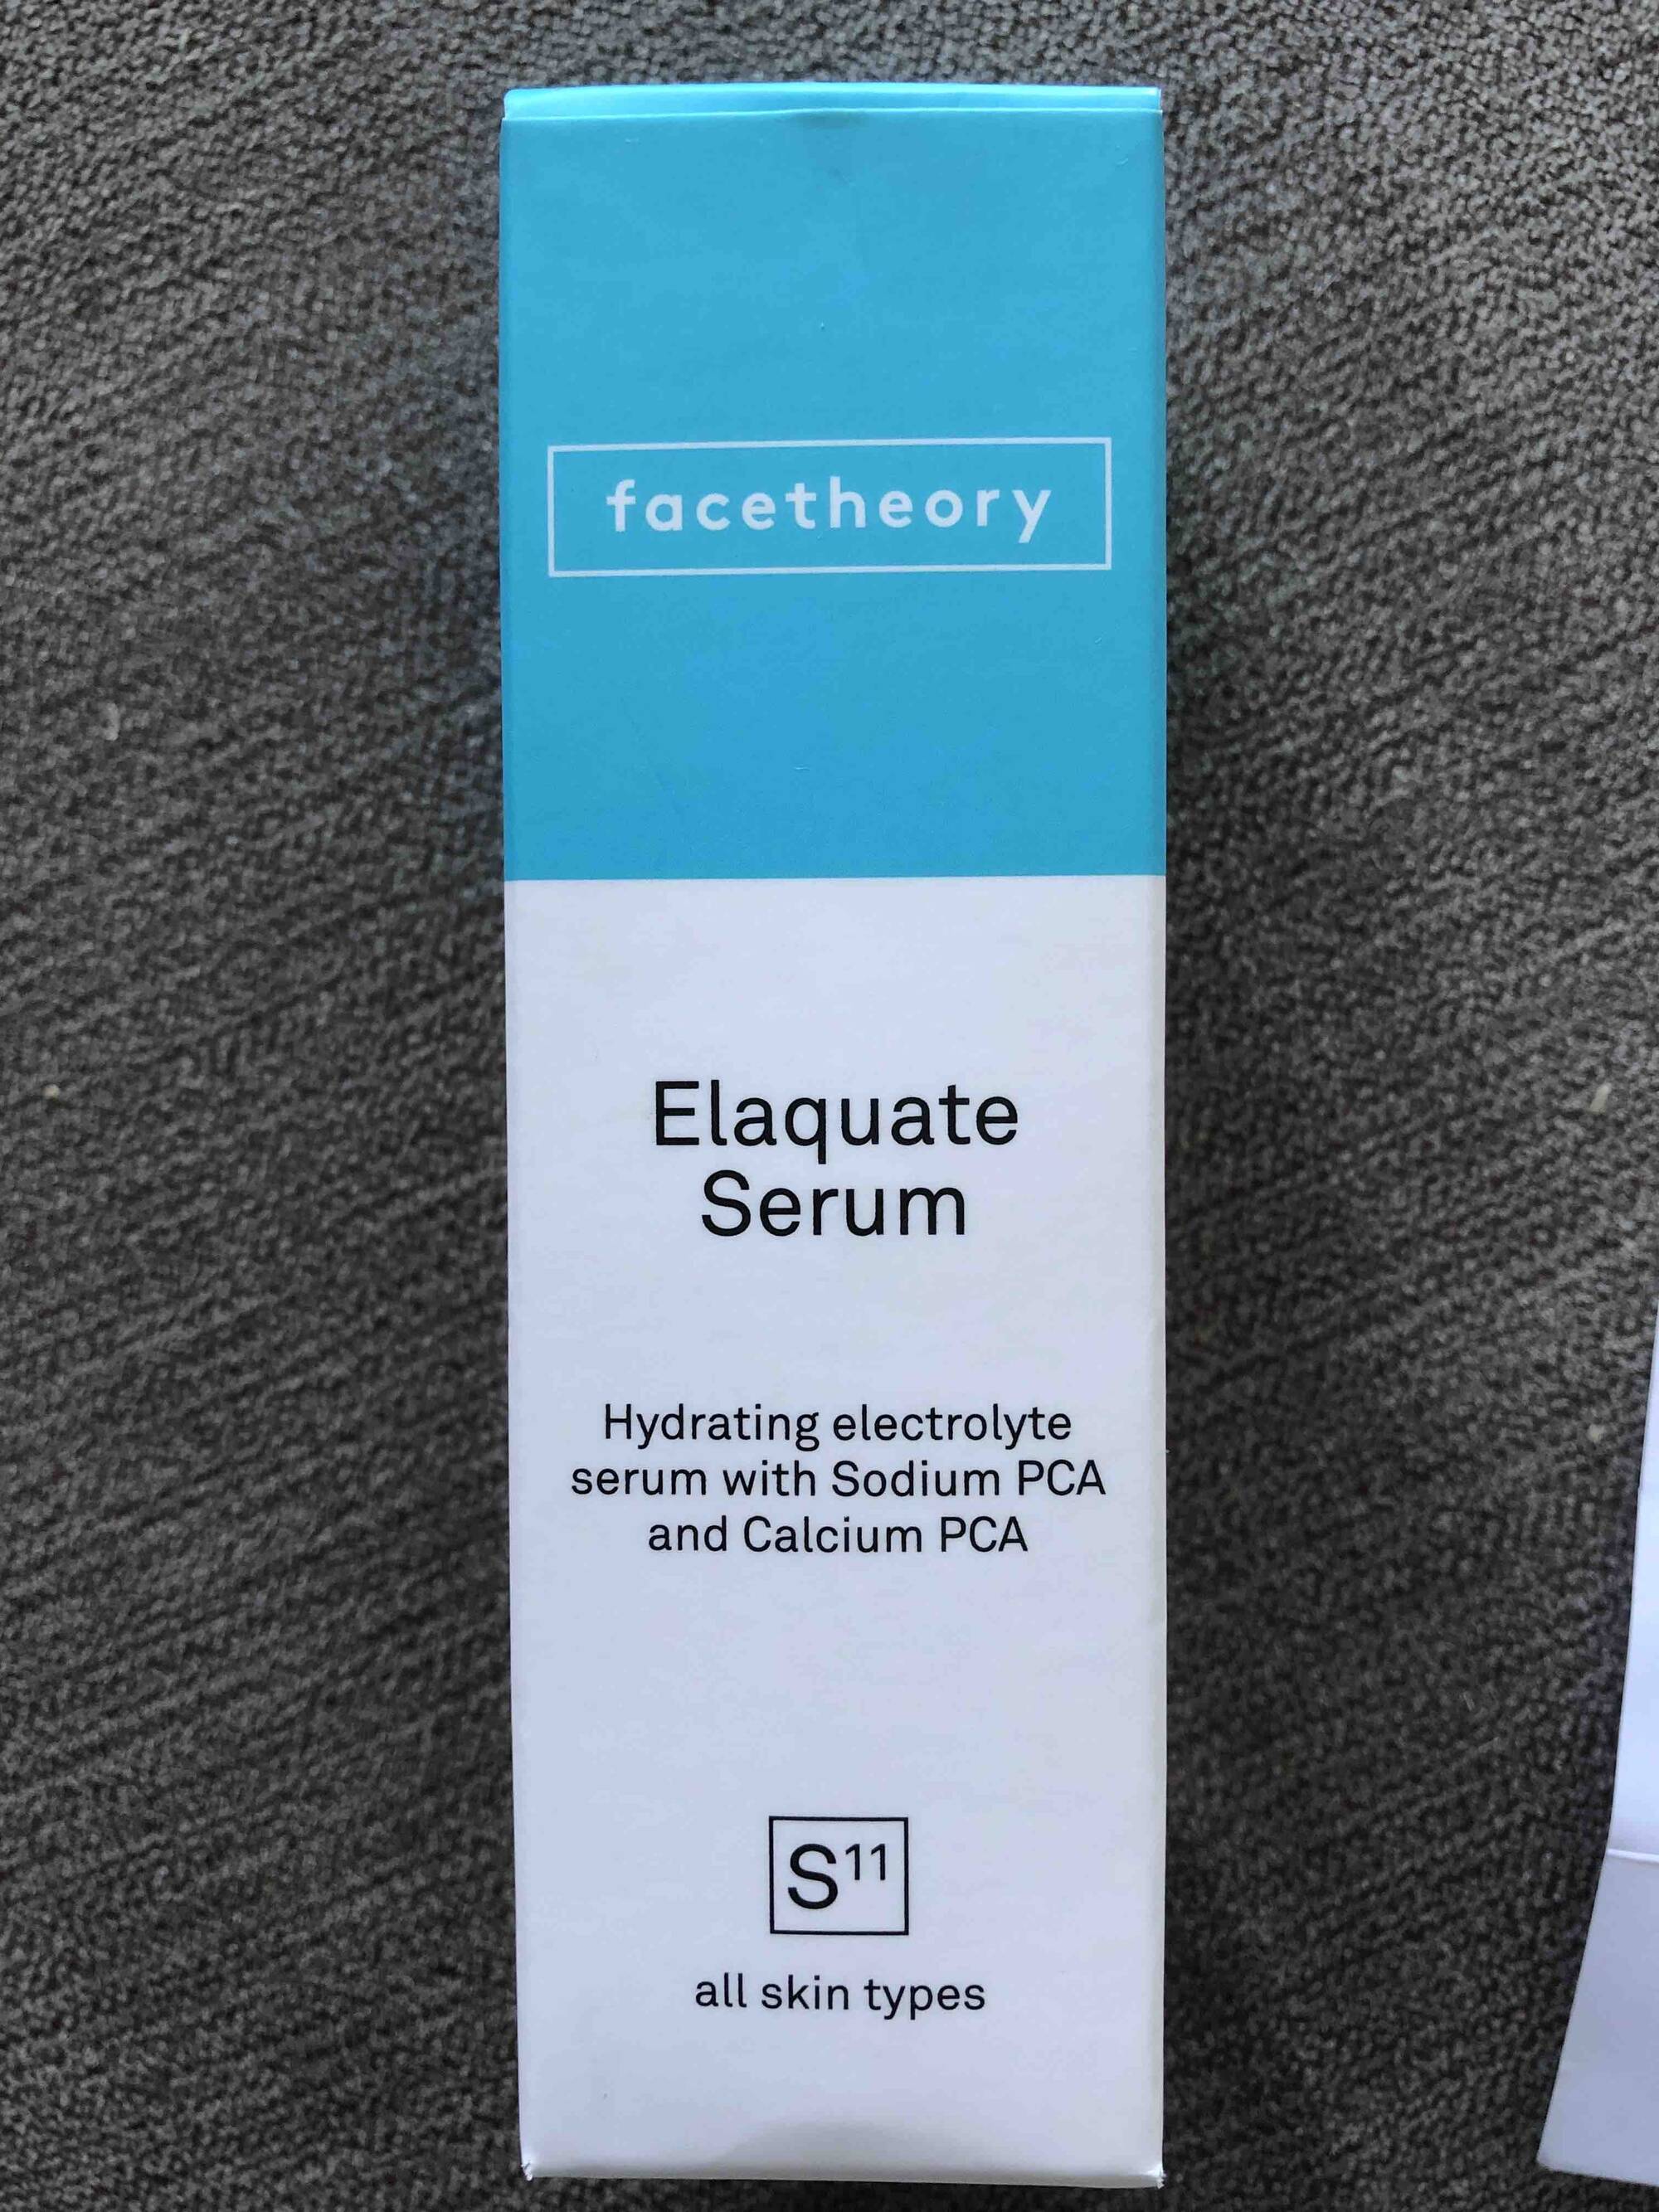 FACETHEORY - Elaquate serum S11 